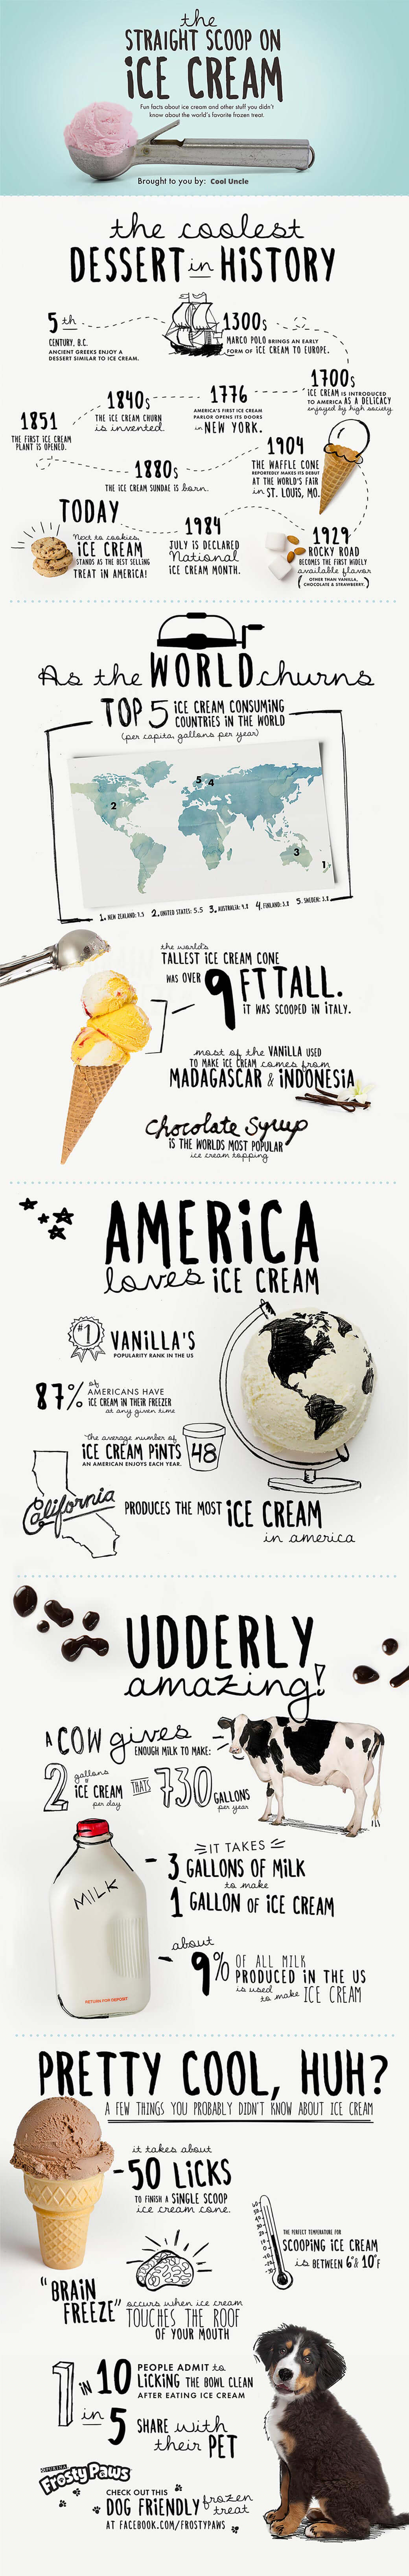 ice-cream-info.jpg